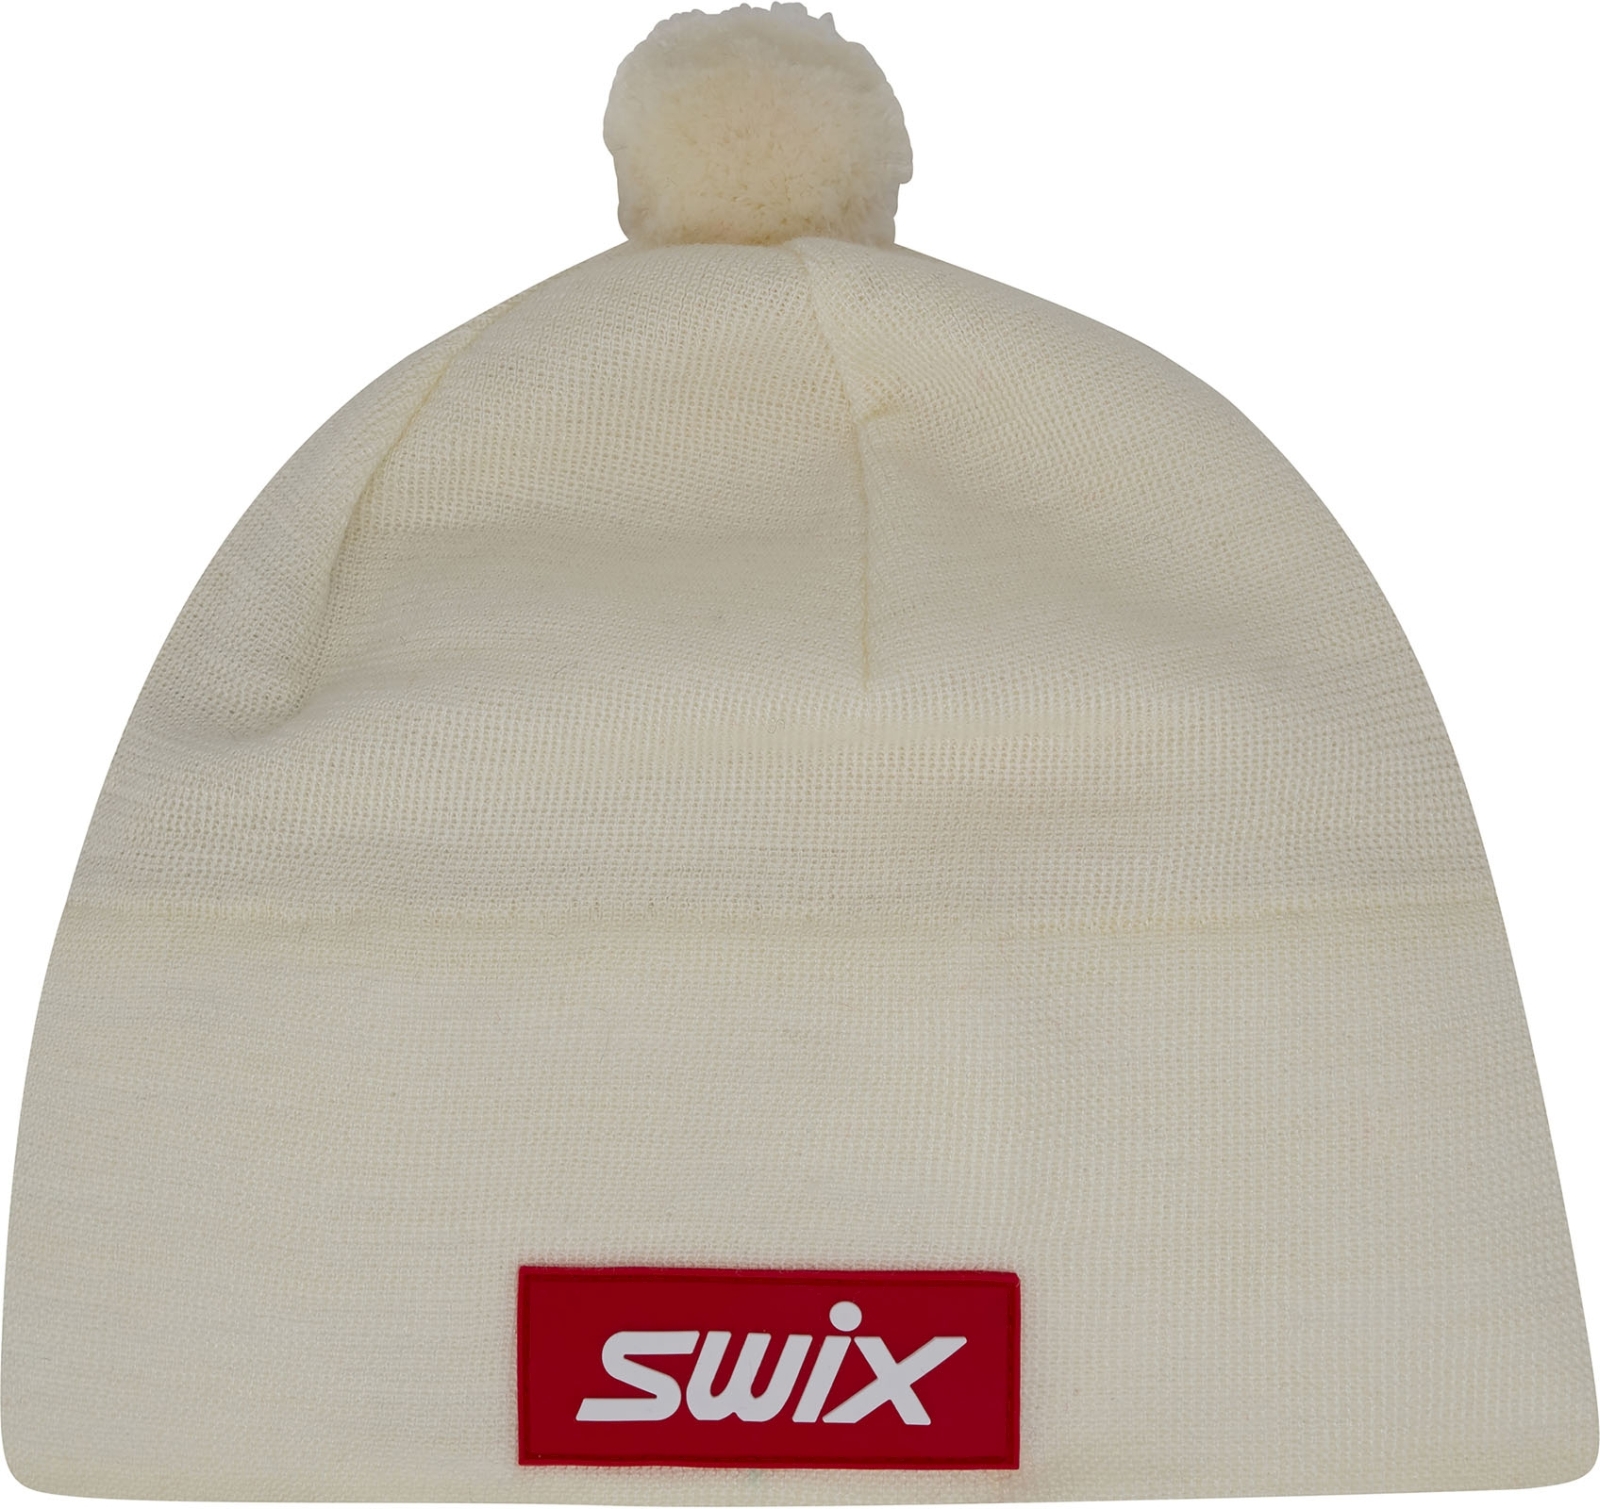 E-shop Swix Tradition hat - Snow White 56